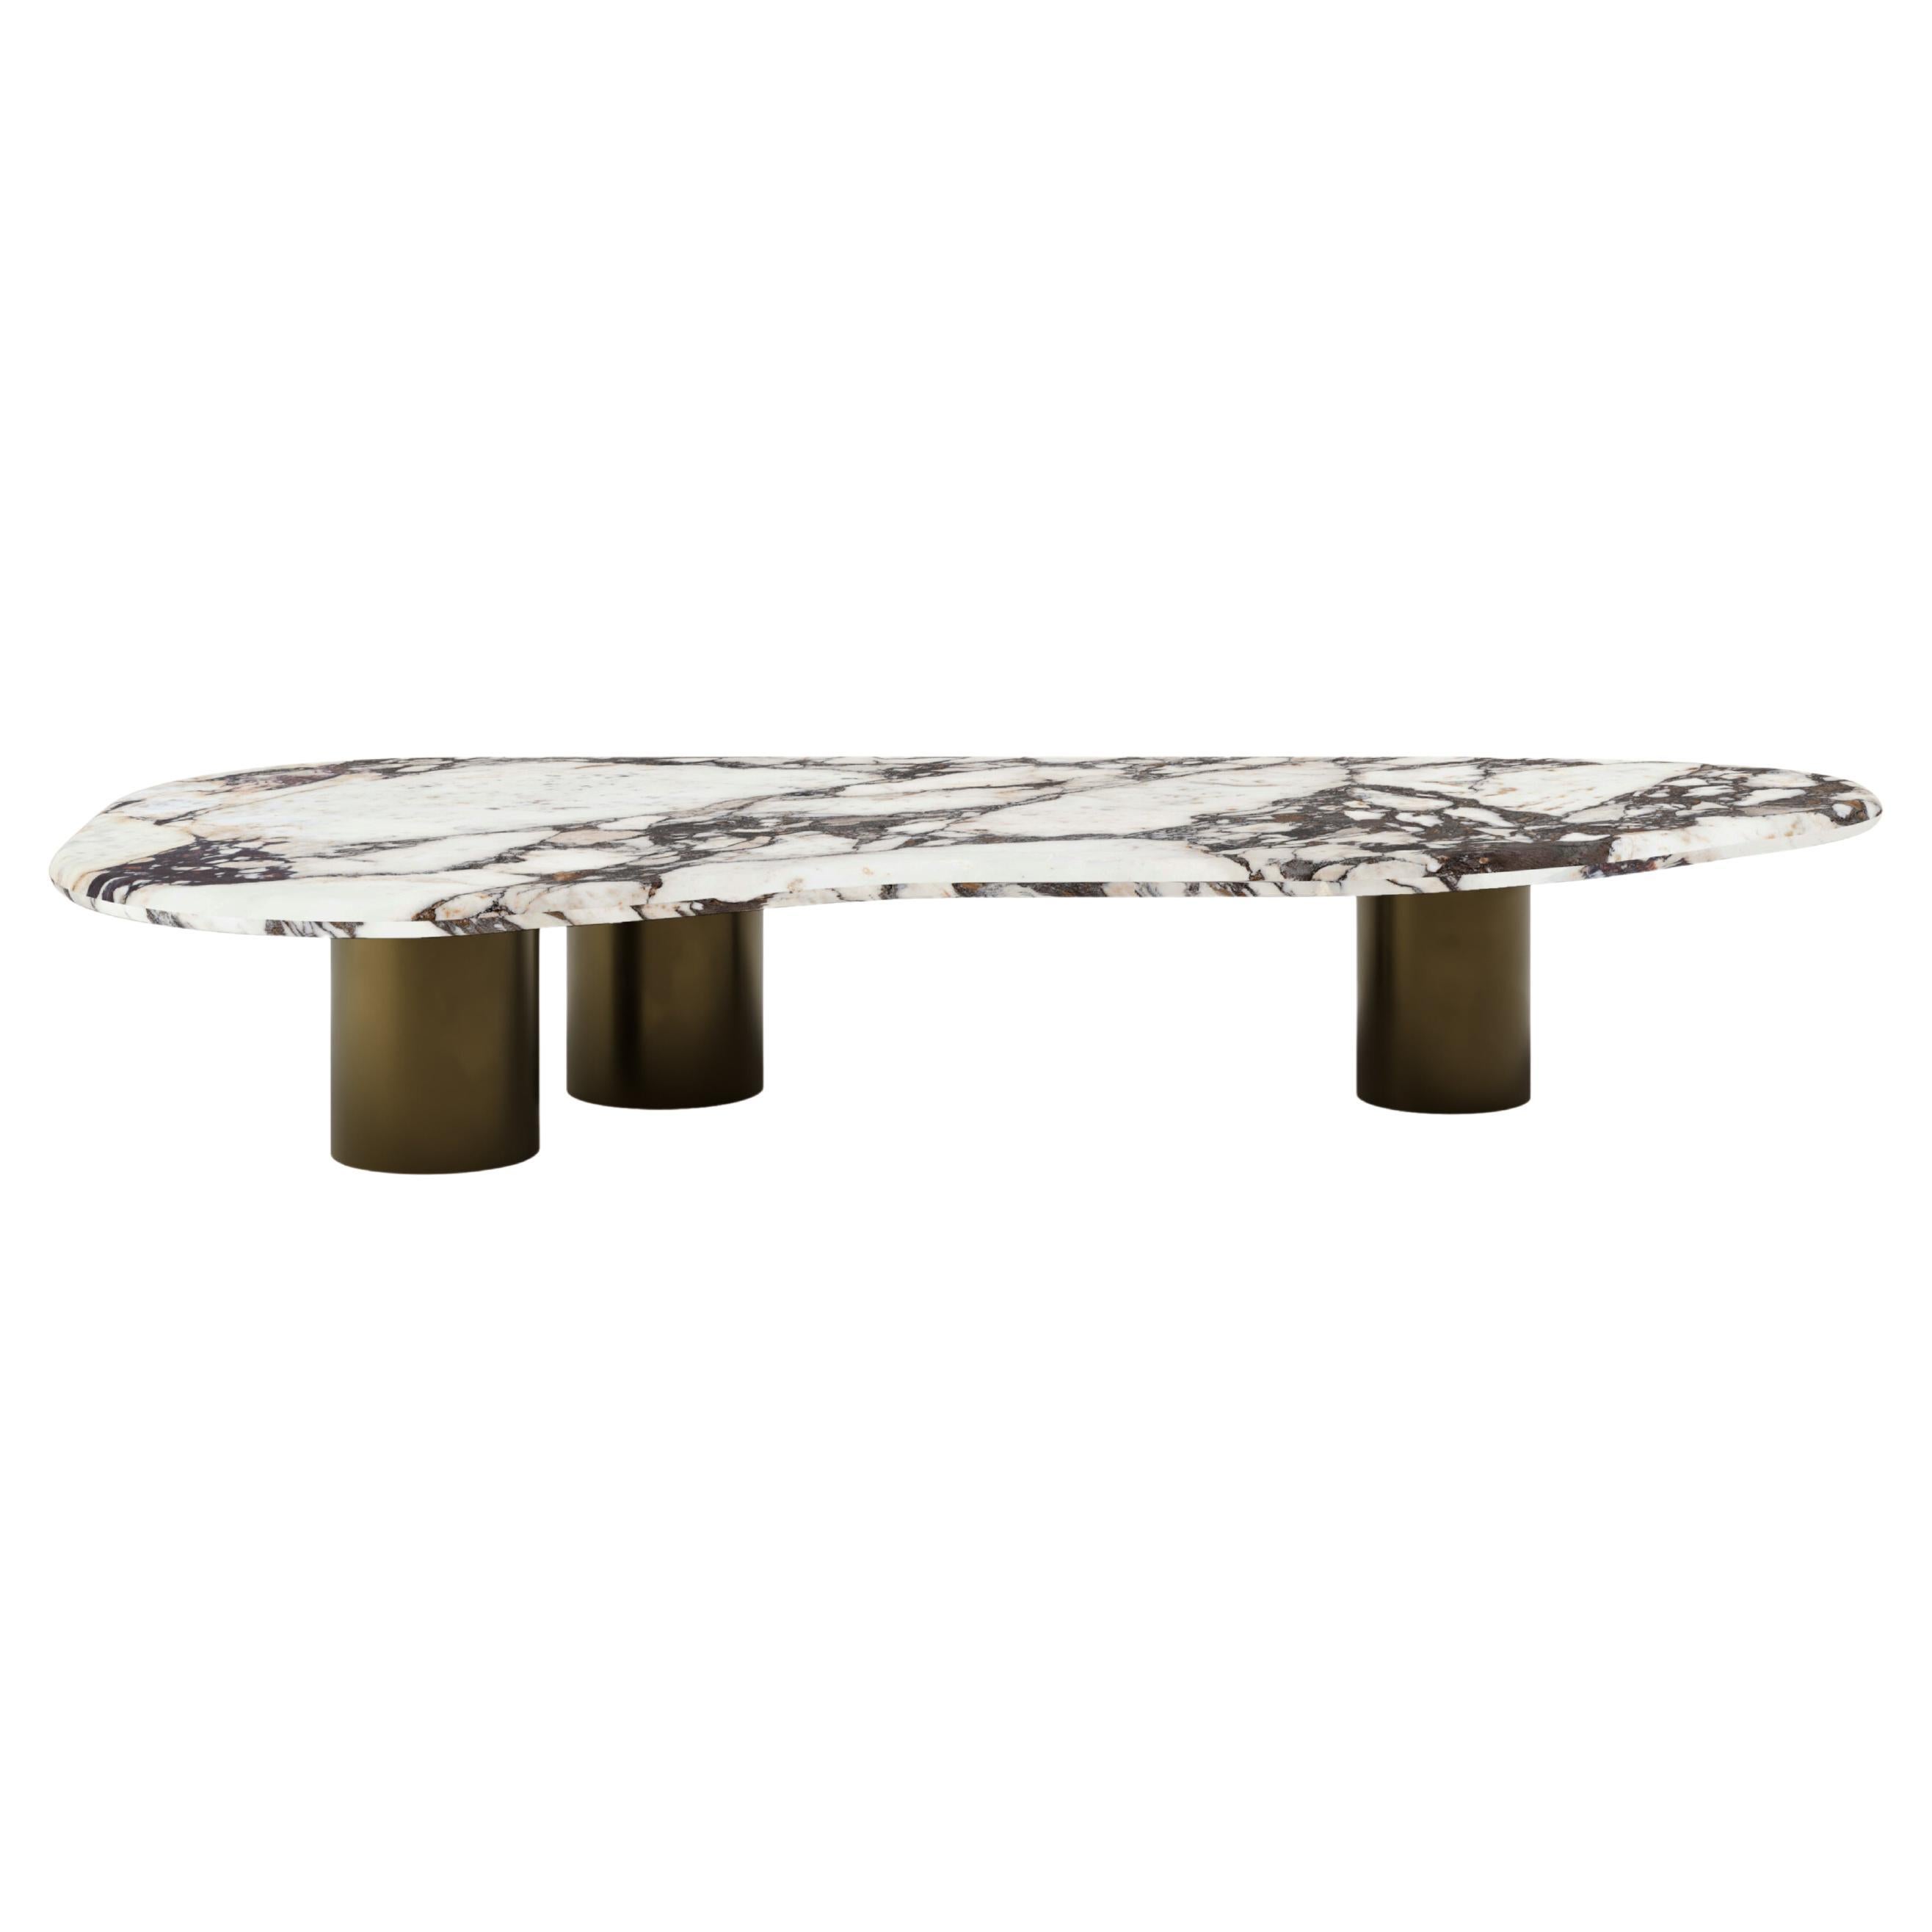 FORM(LA) Lago Freeform Coffee Table 60”L x 30”W x 12”H Viola Marble & Bronze For Sale